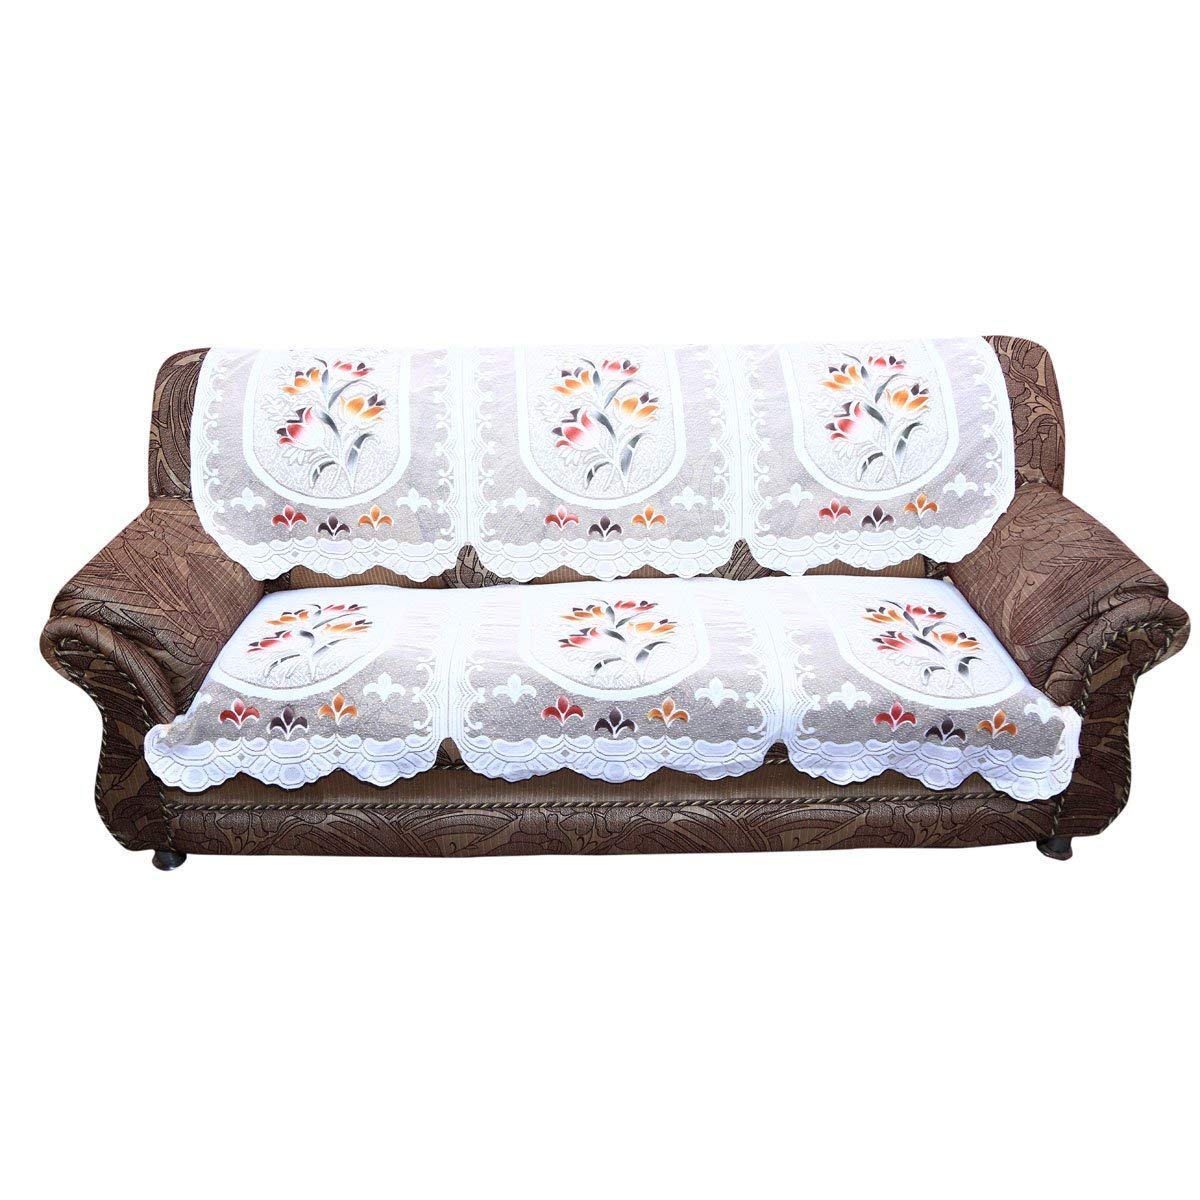 Kuber Industries Cotton Flower 5 Seater Sofa Cover Set (CTKTC28709, Cream, Standard) - 6 Pieces